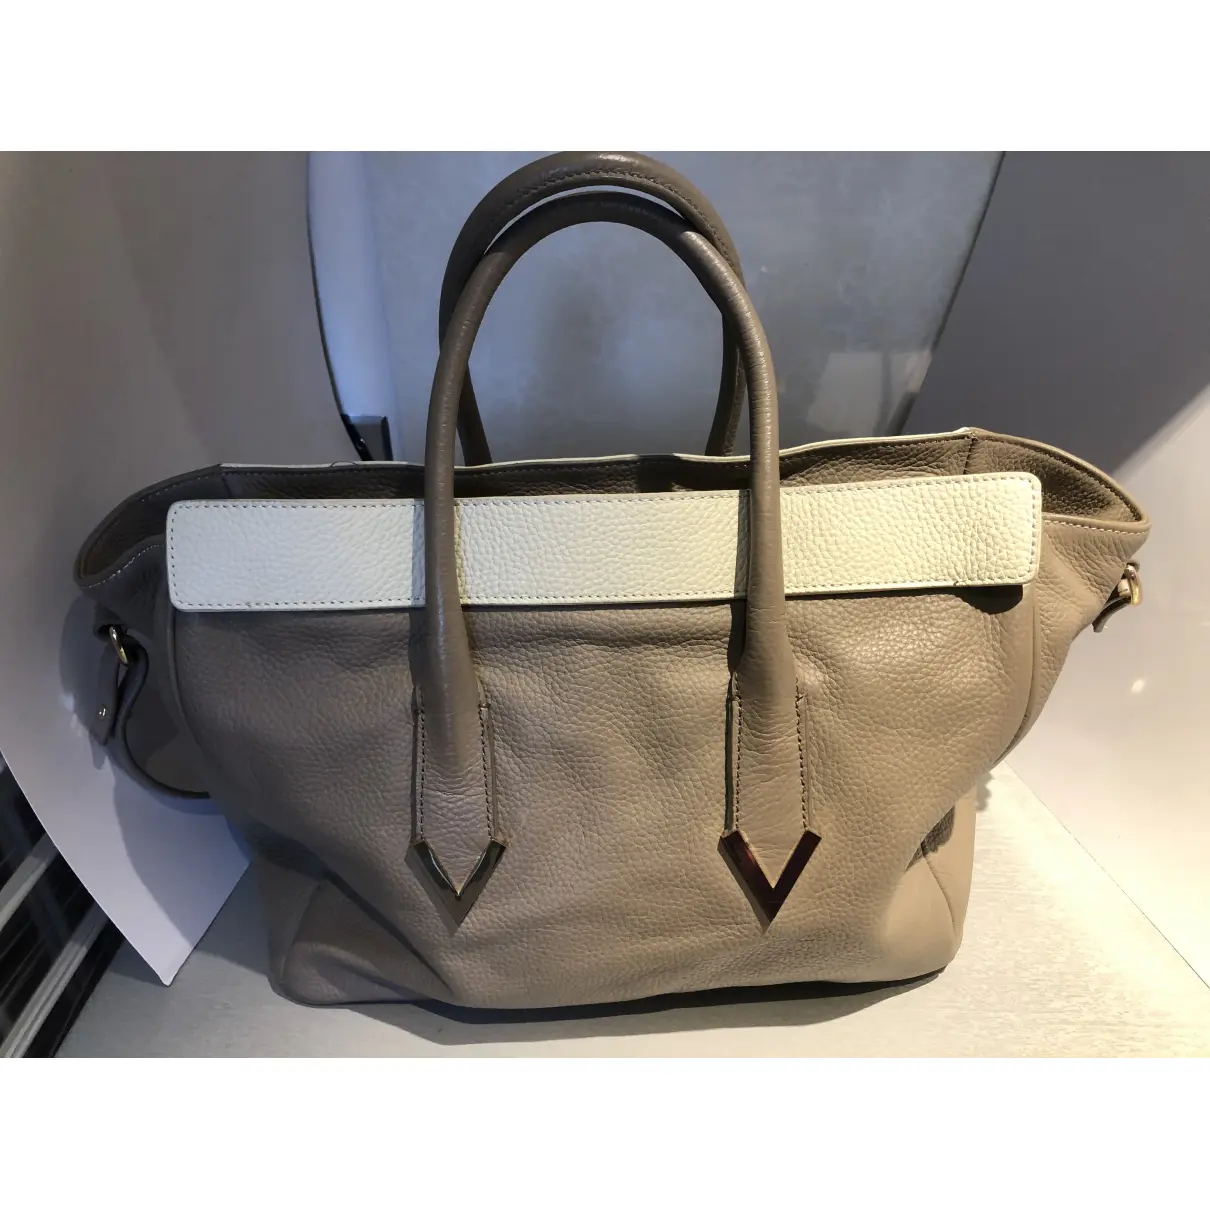 Buy V 73 Leather handbag online